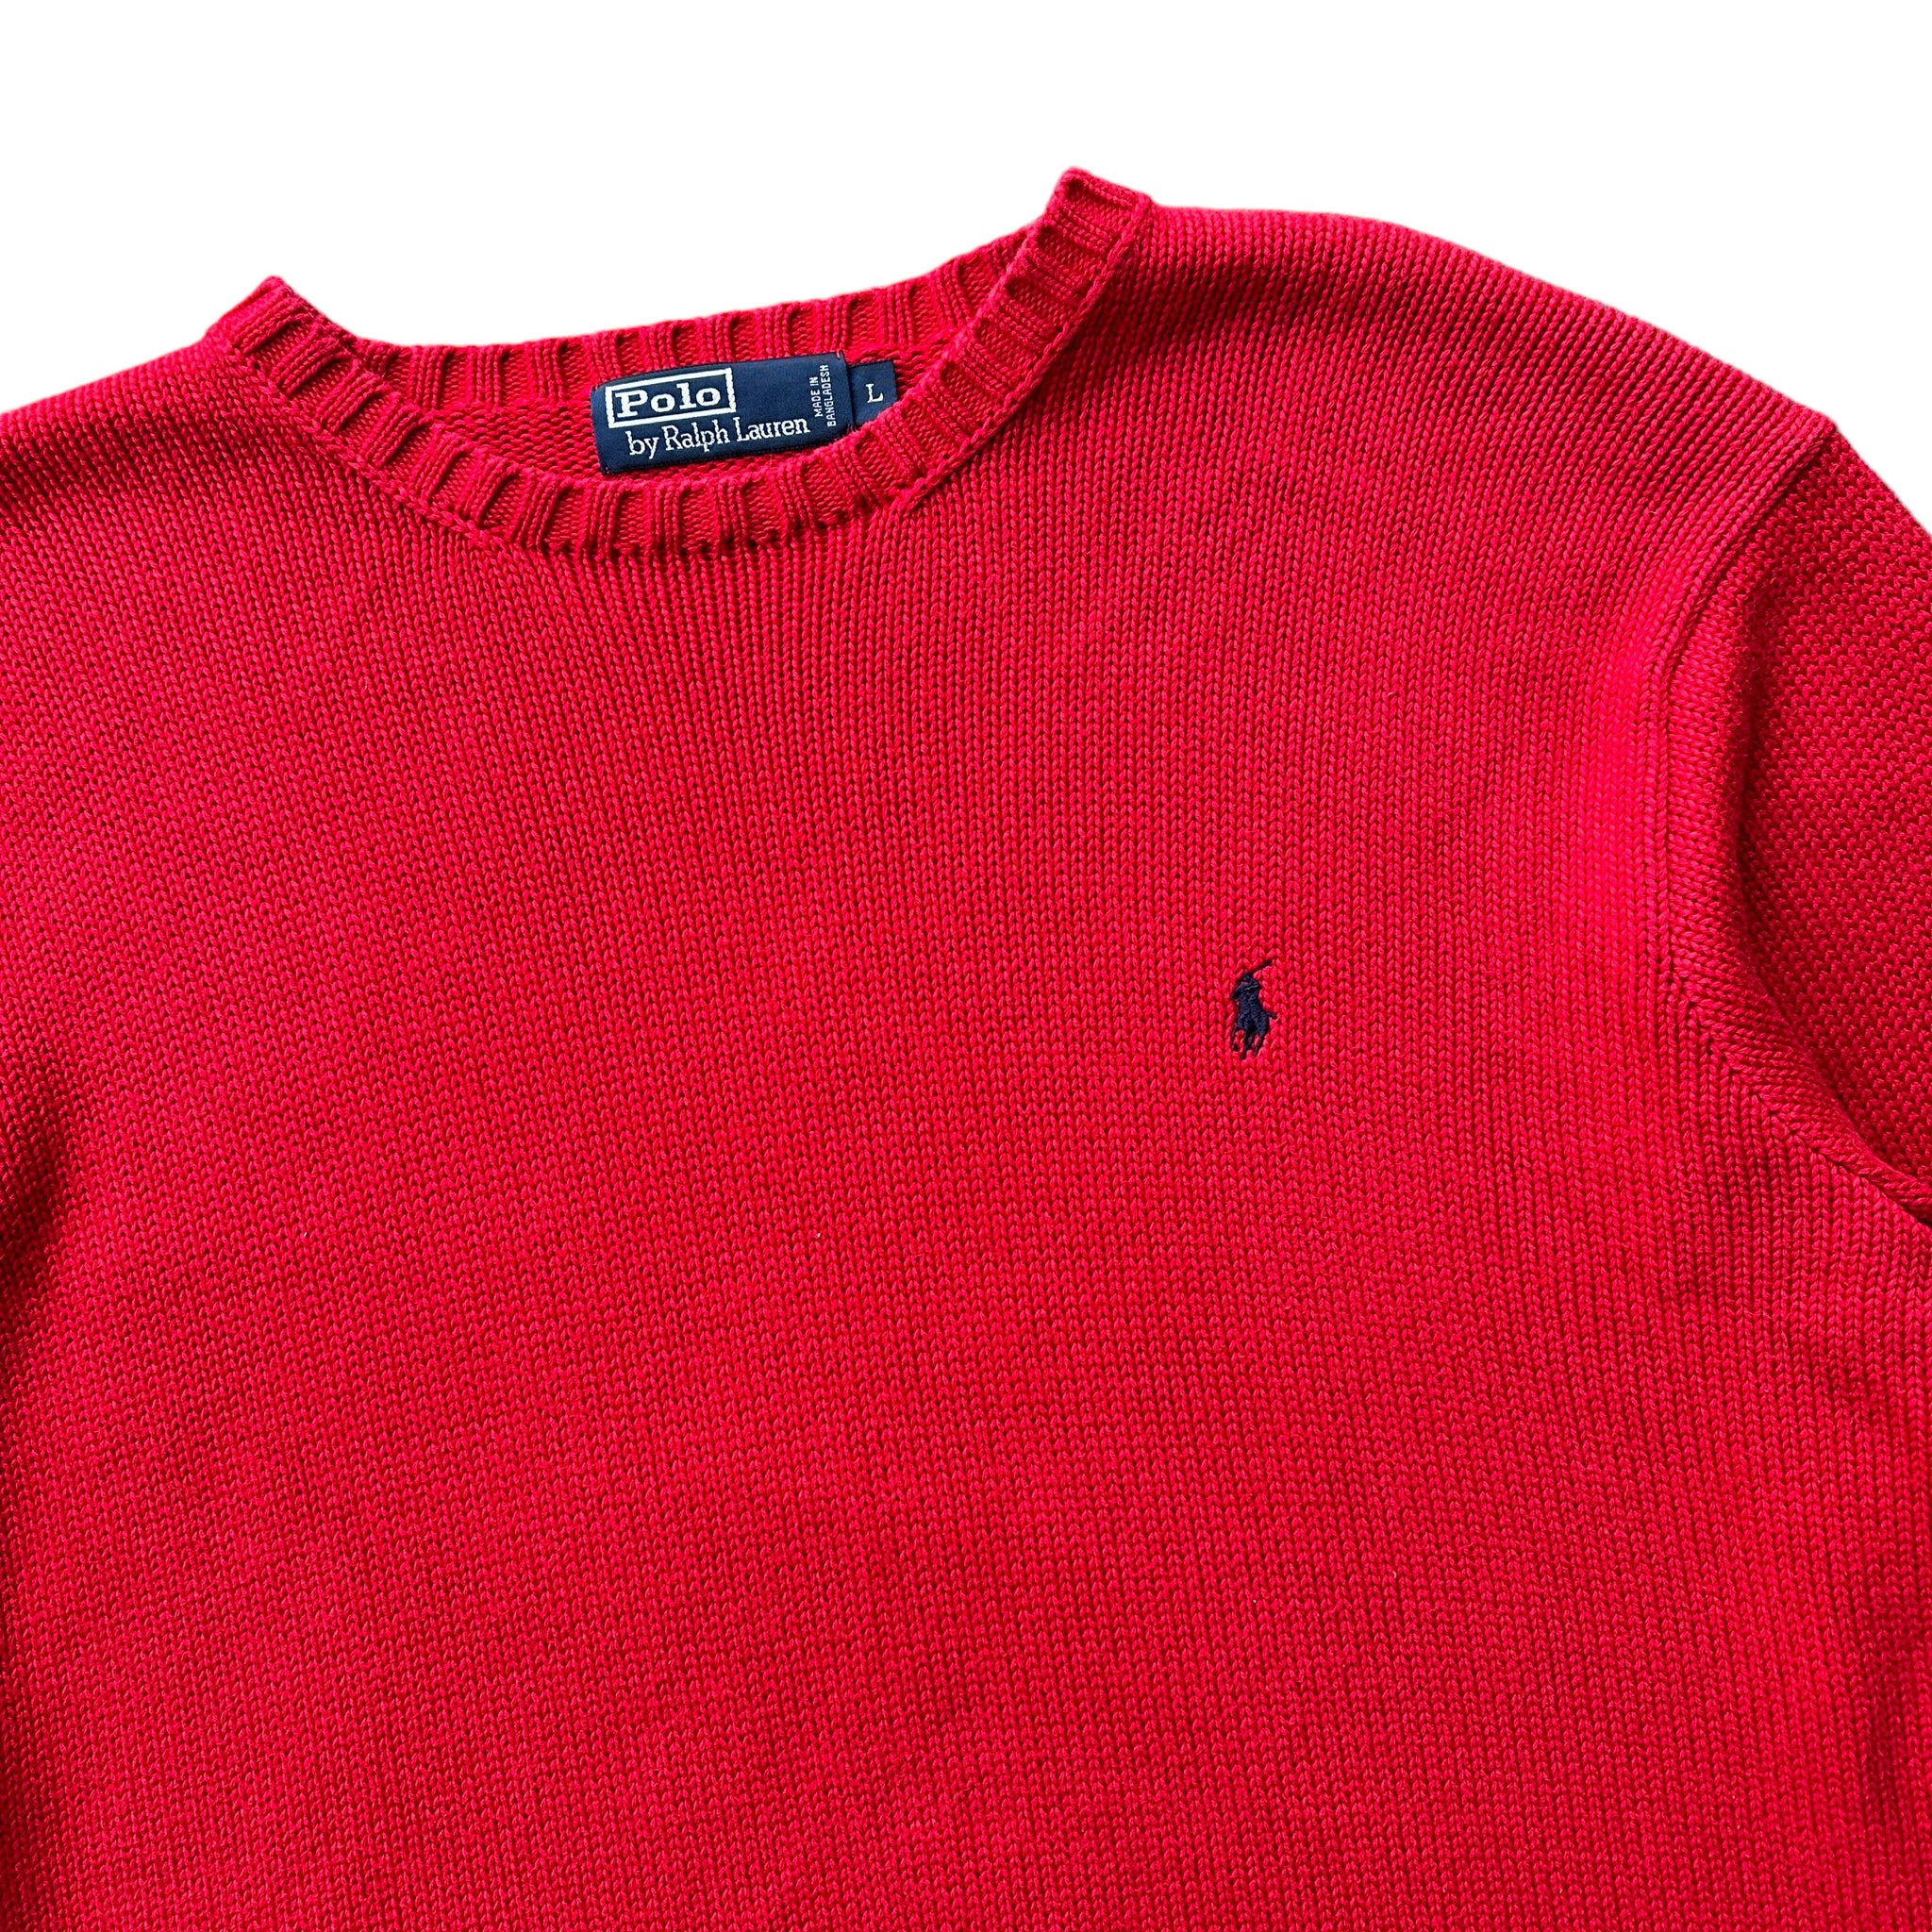 Polo ralph lauren cotton sweater large